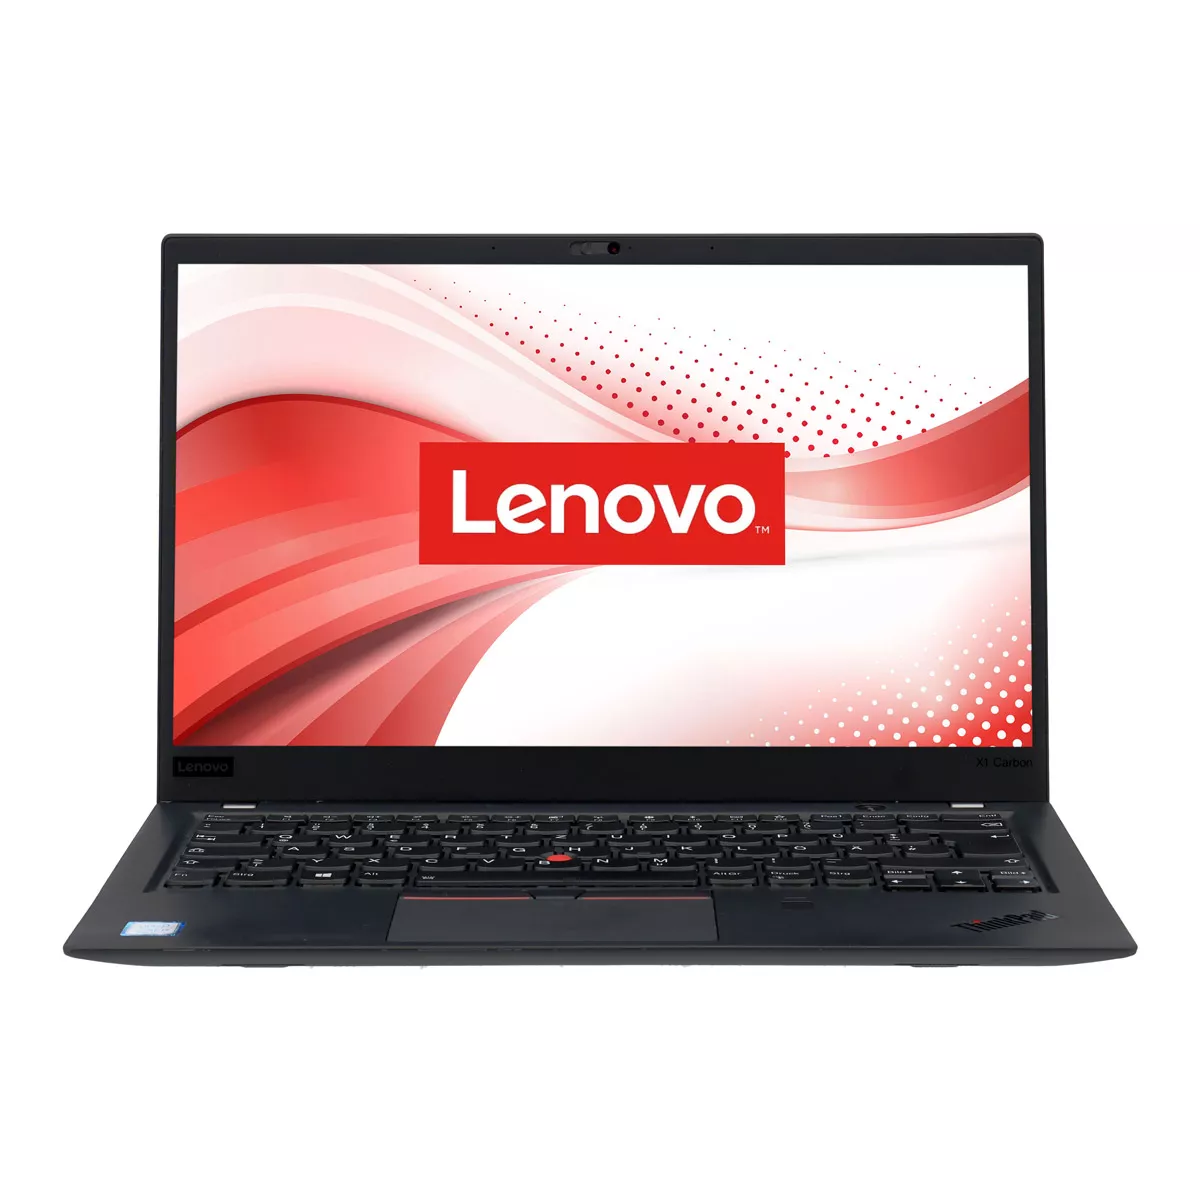 Lenovo ThinkPad X1 Yoga G3 Core i5 8350U Touch 240 GB M.2 SSD Webcam A